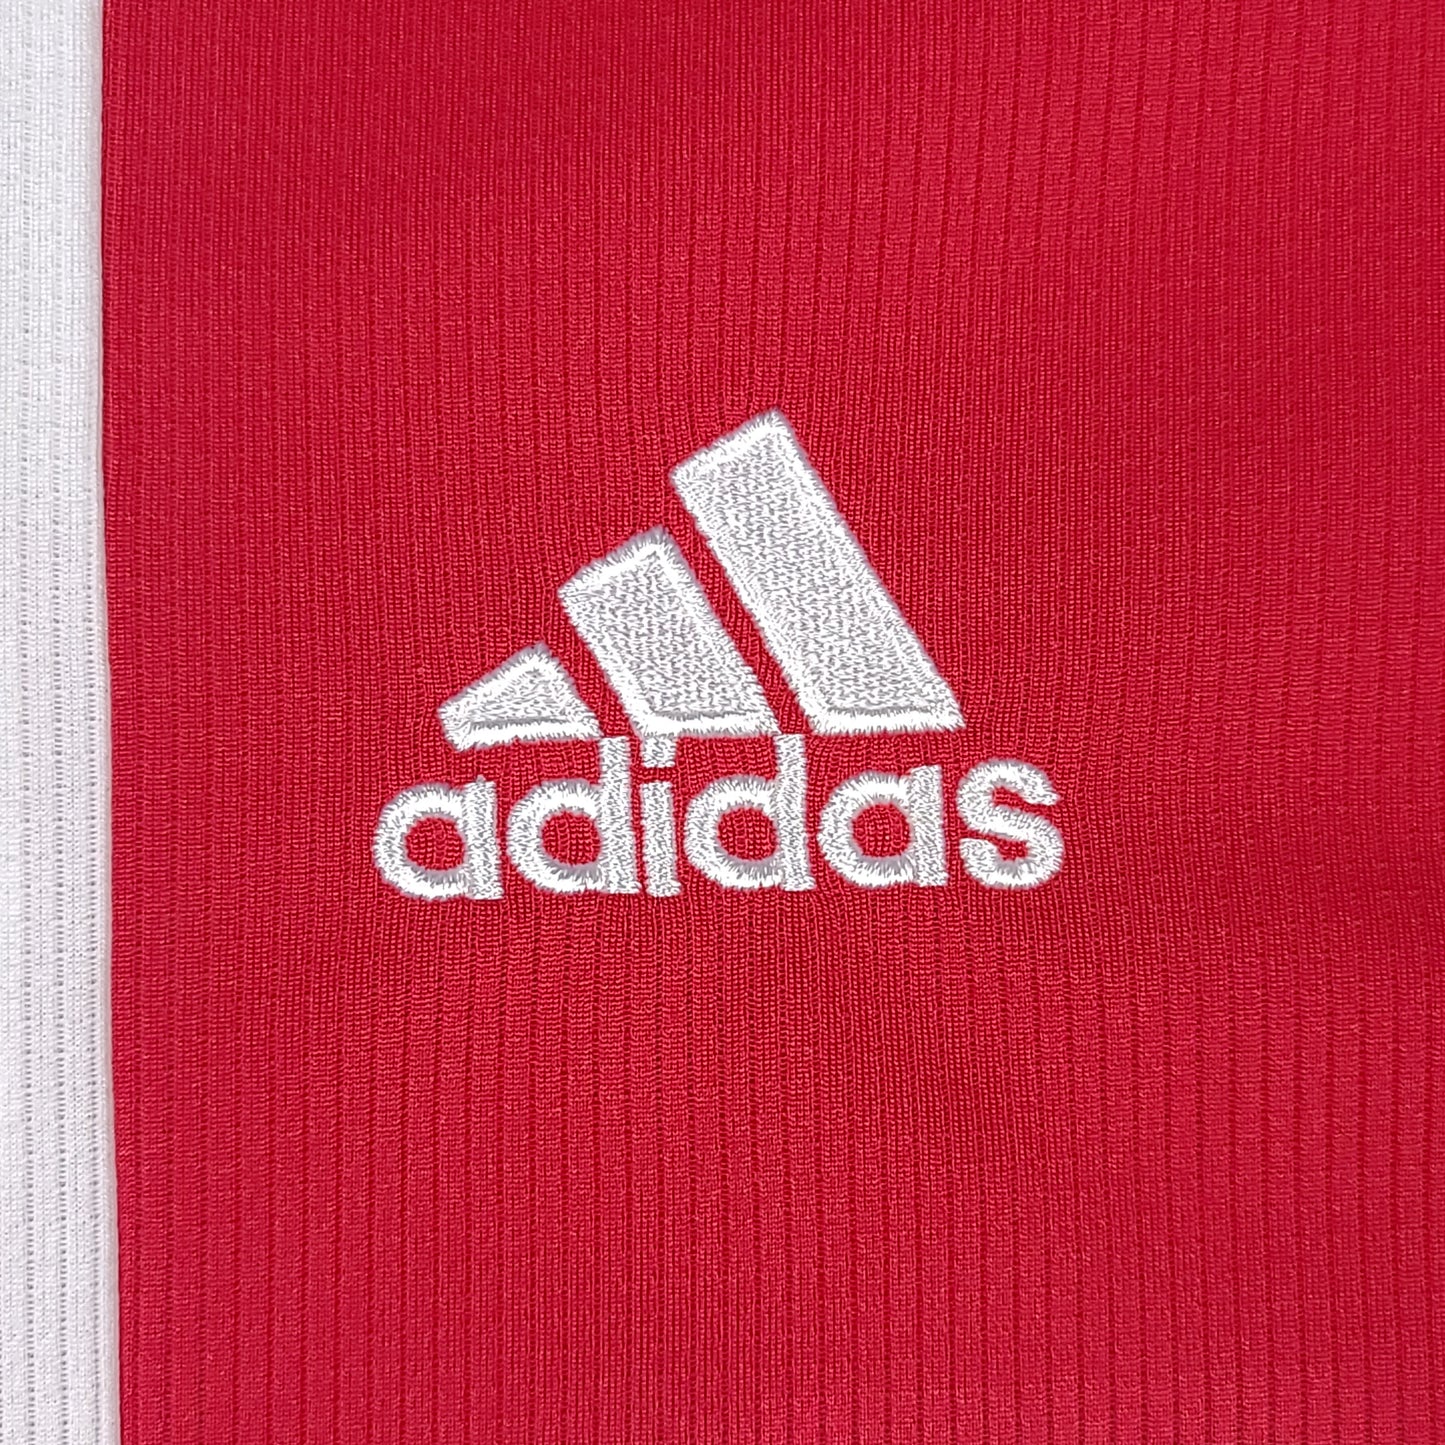 Ajax Amsterdam Red/White 2020-21 adidas Soccer Jersey